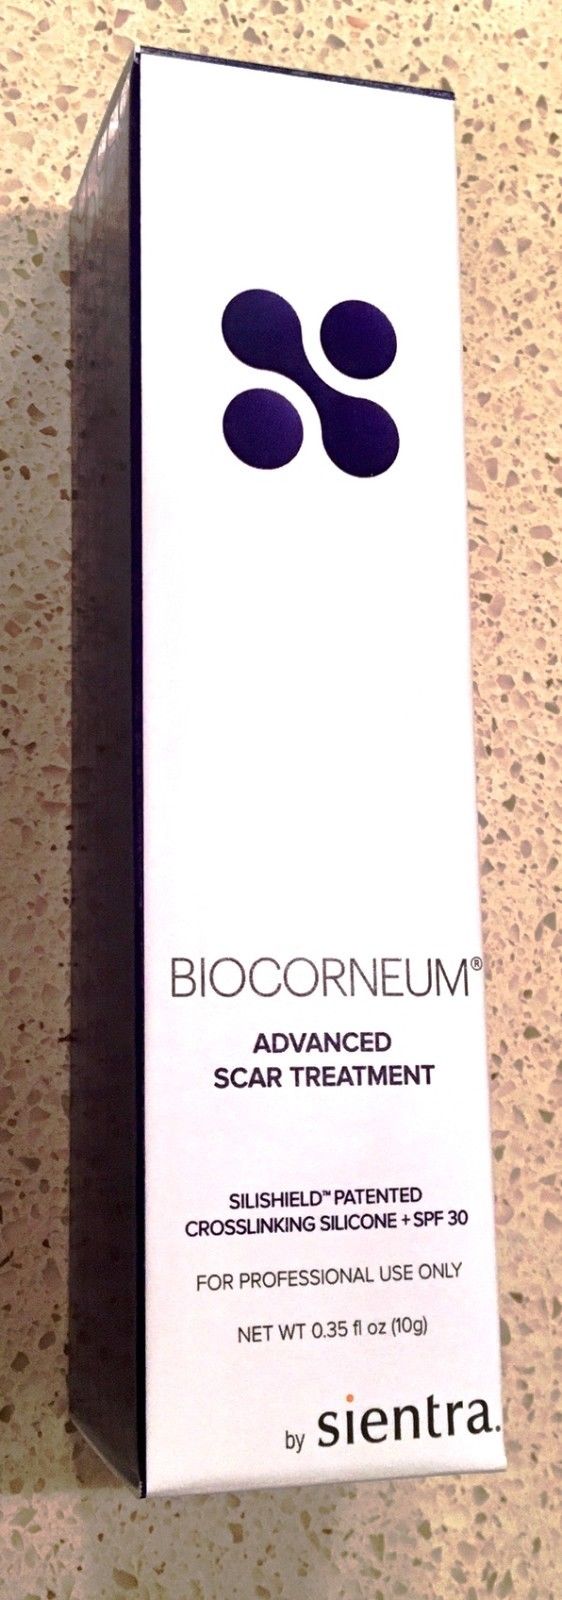 bioCorneum Advanced Scar Treatment, 10 g / 0.35 fl oz, NEW in box, EXP: 9/2020